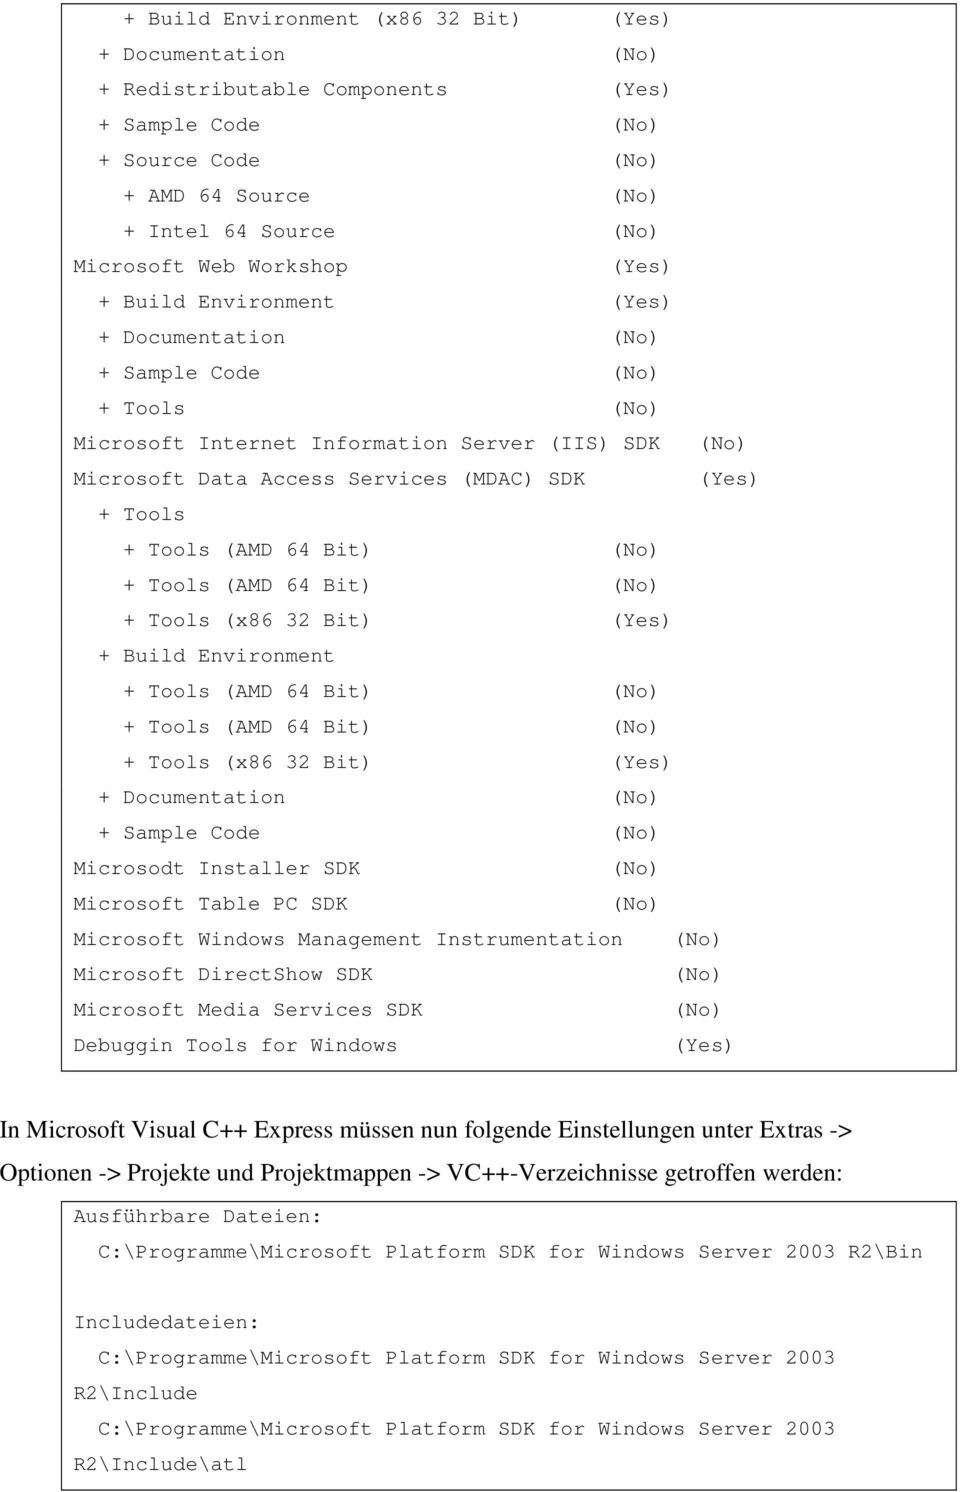 Environment + Tools (x86 32 Bit) (Yes) + Documentation + Sample Code Microsodt Installer SDK Microsoft Table PC SDK Microsoft Windows Management Instrumentation Microsoft DirectShow SDK Microsoft